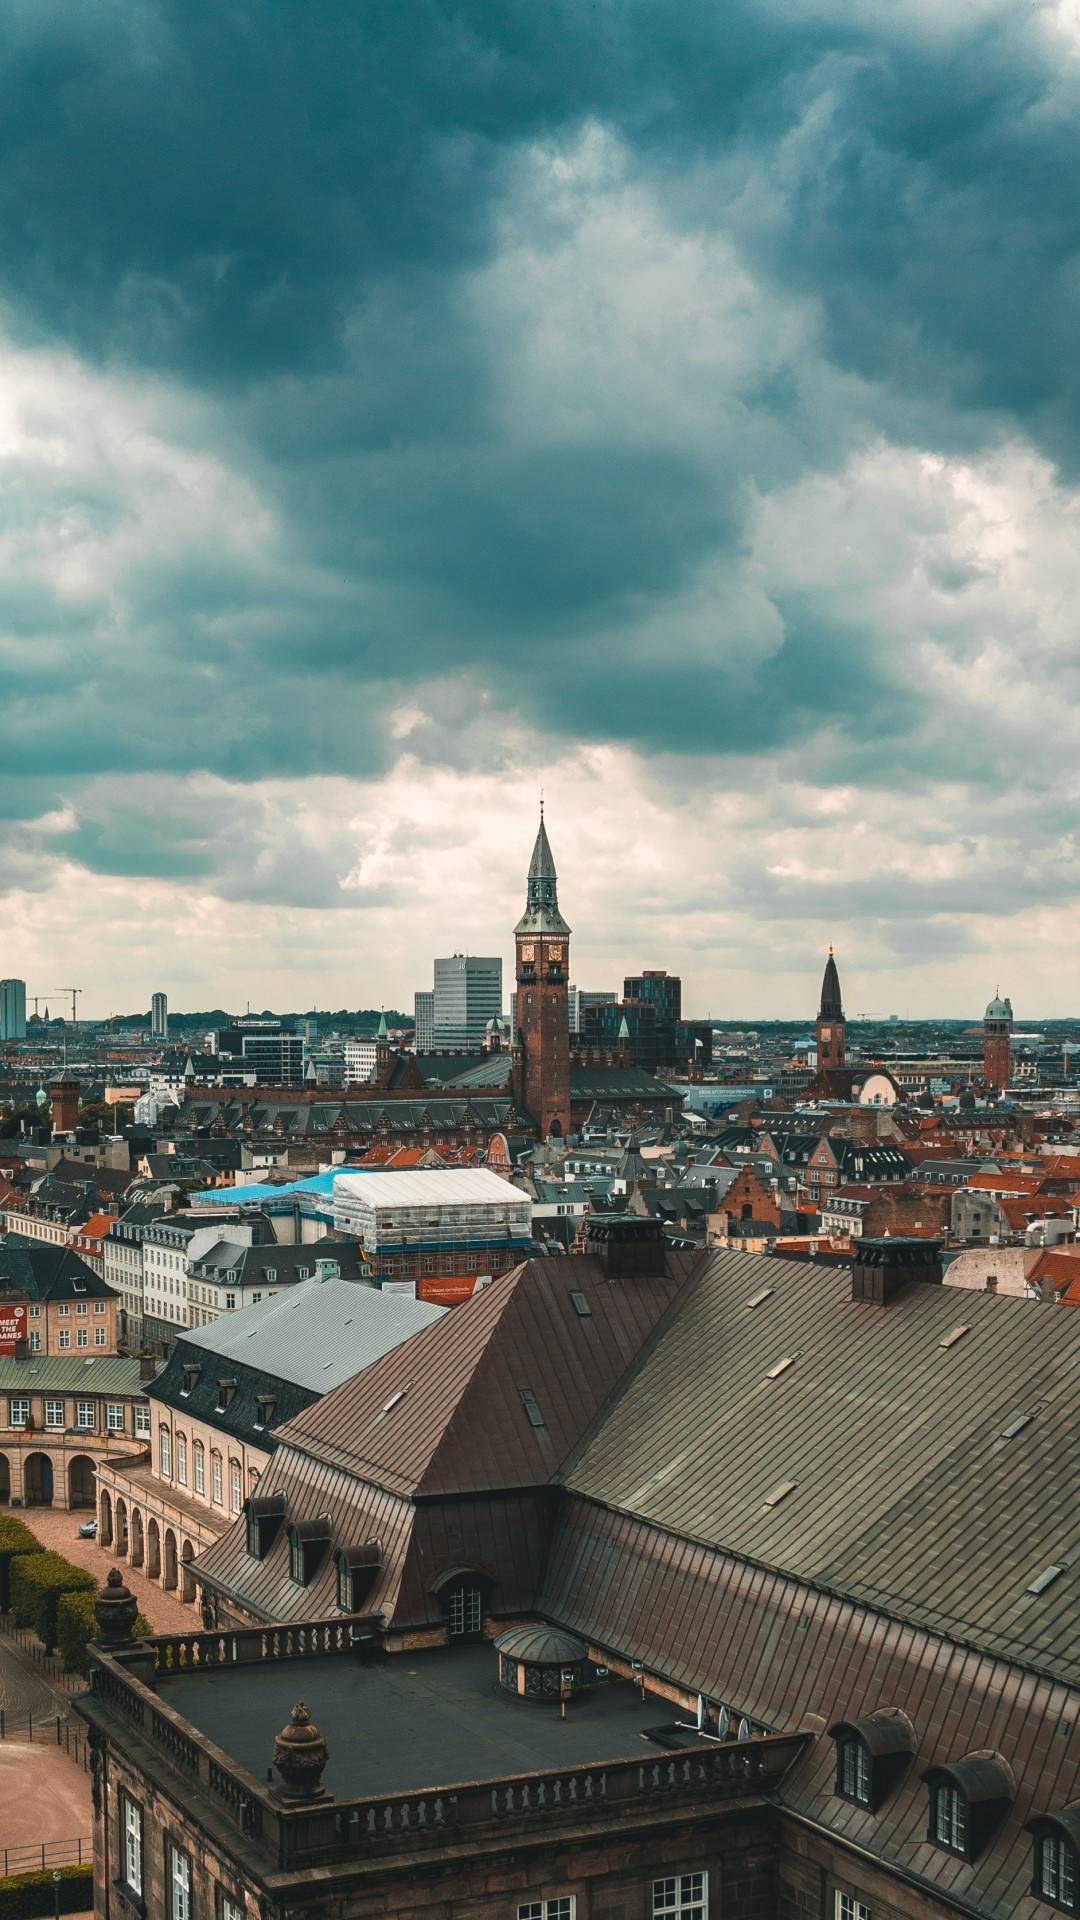 Architectural marvels of Copenhagen, Impressive skyline, Cloud-filled backdrop, Wallpaper-worthy, 1080x1920 Full HD Handy